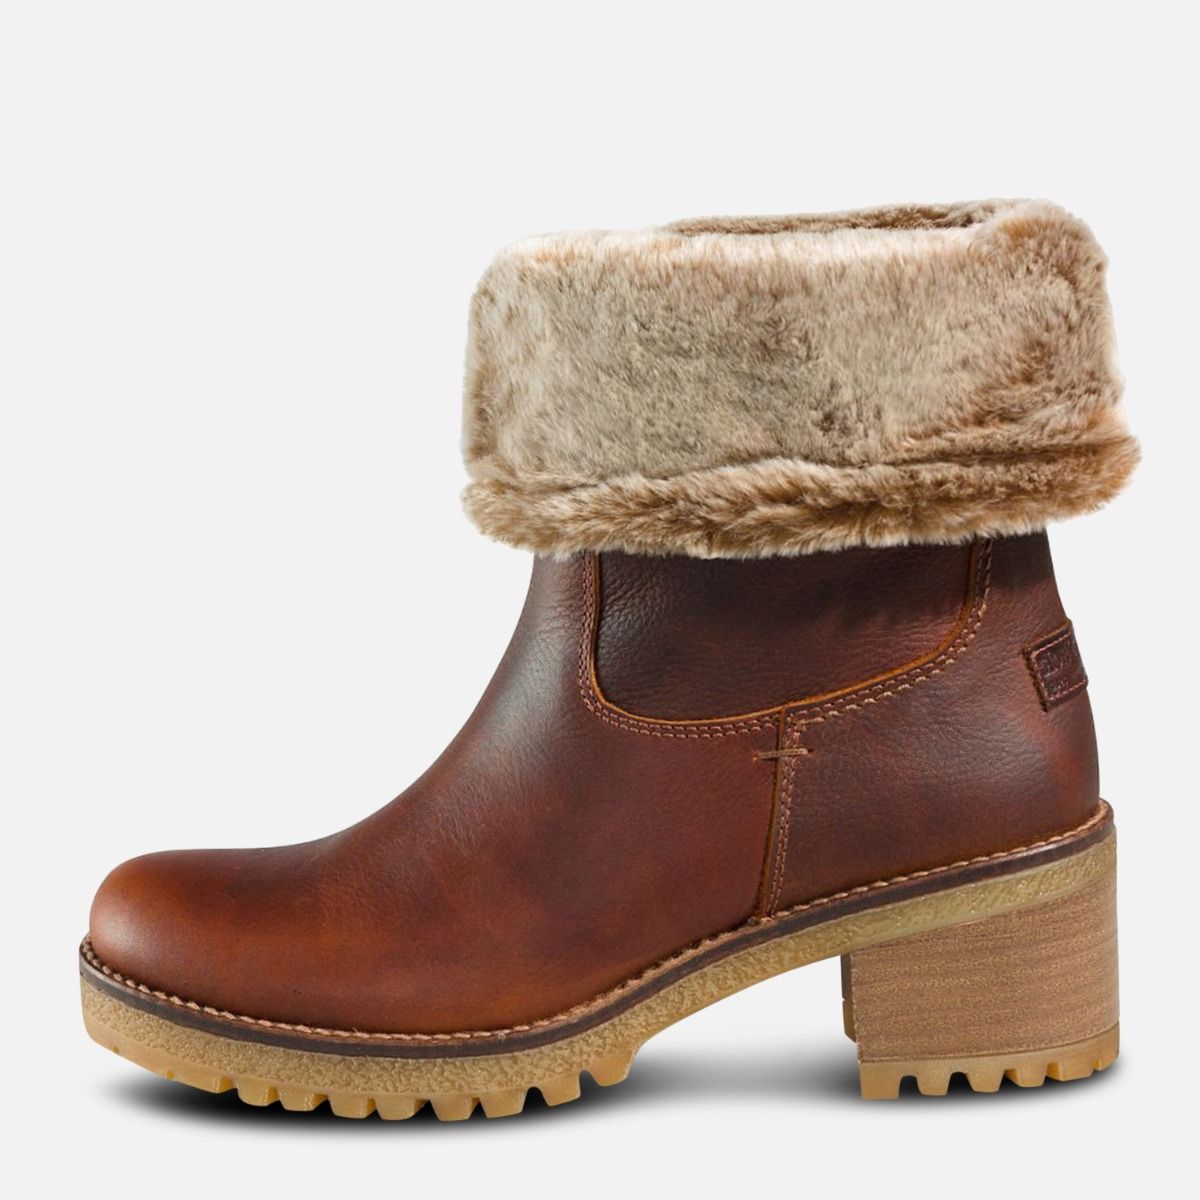 stikstof begaan Additief Ladies Panama Jack Chestnut Brown Fur Piola Boots